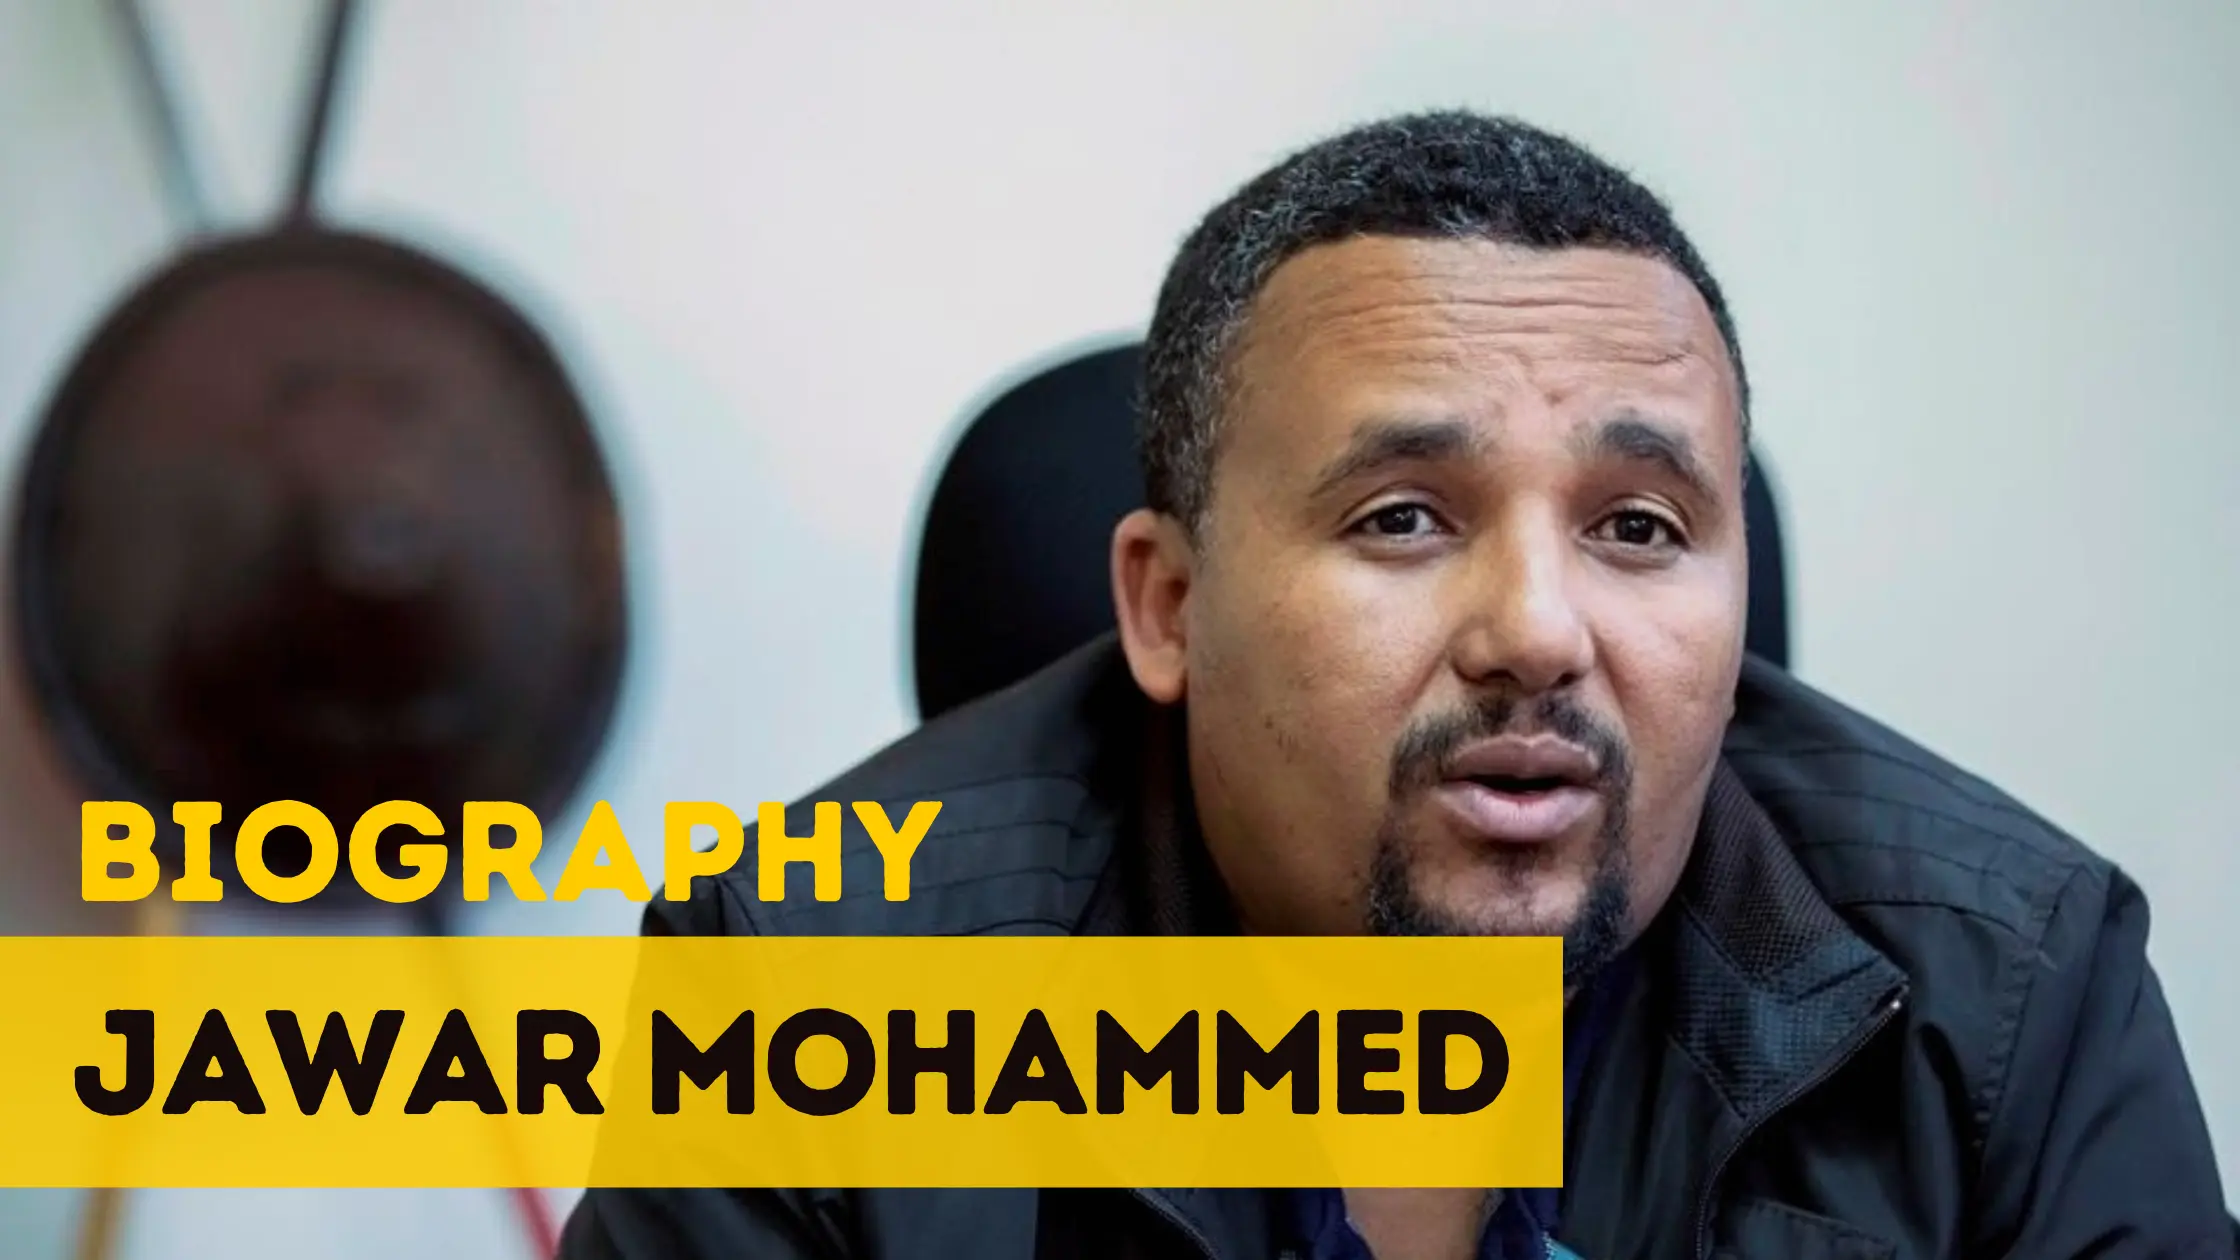 Jawar Mohammed biography